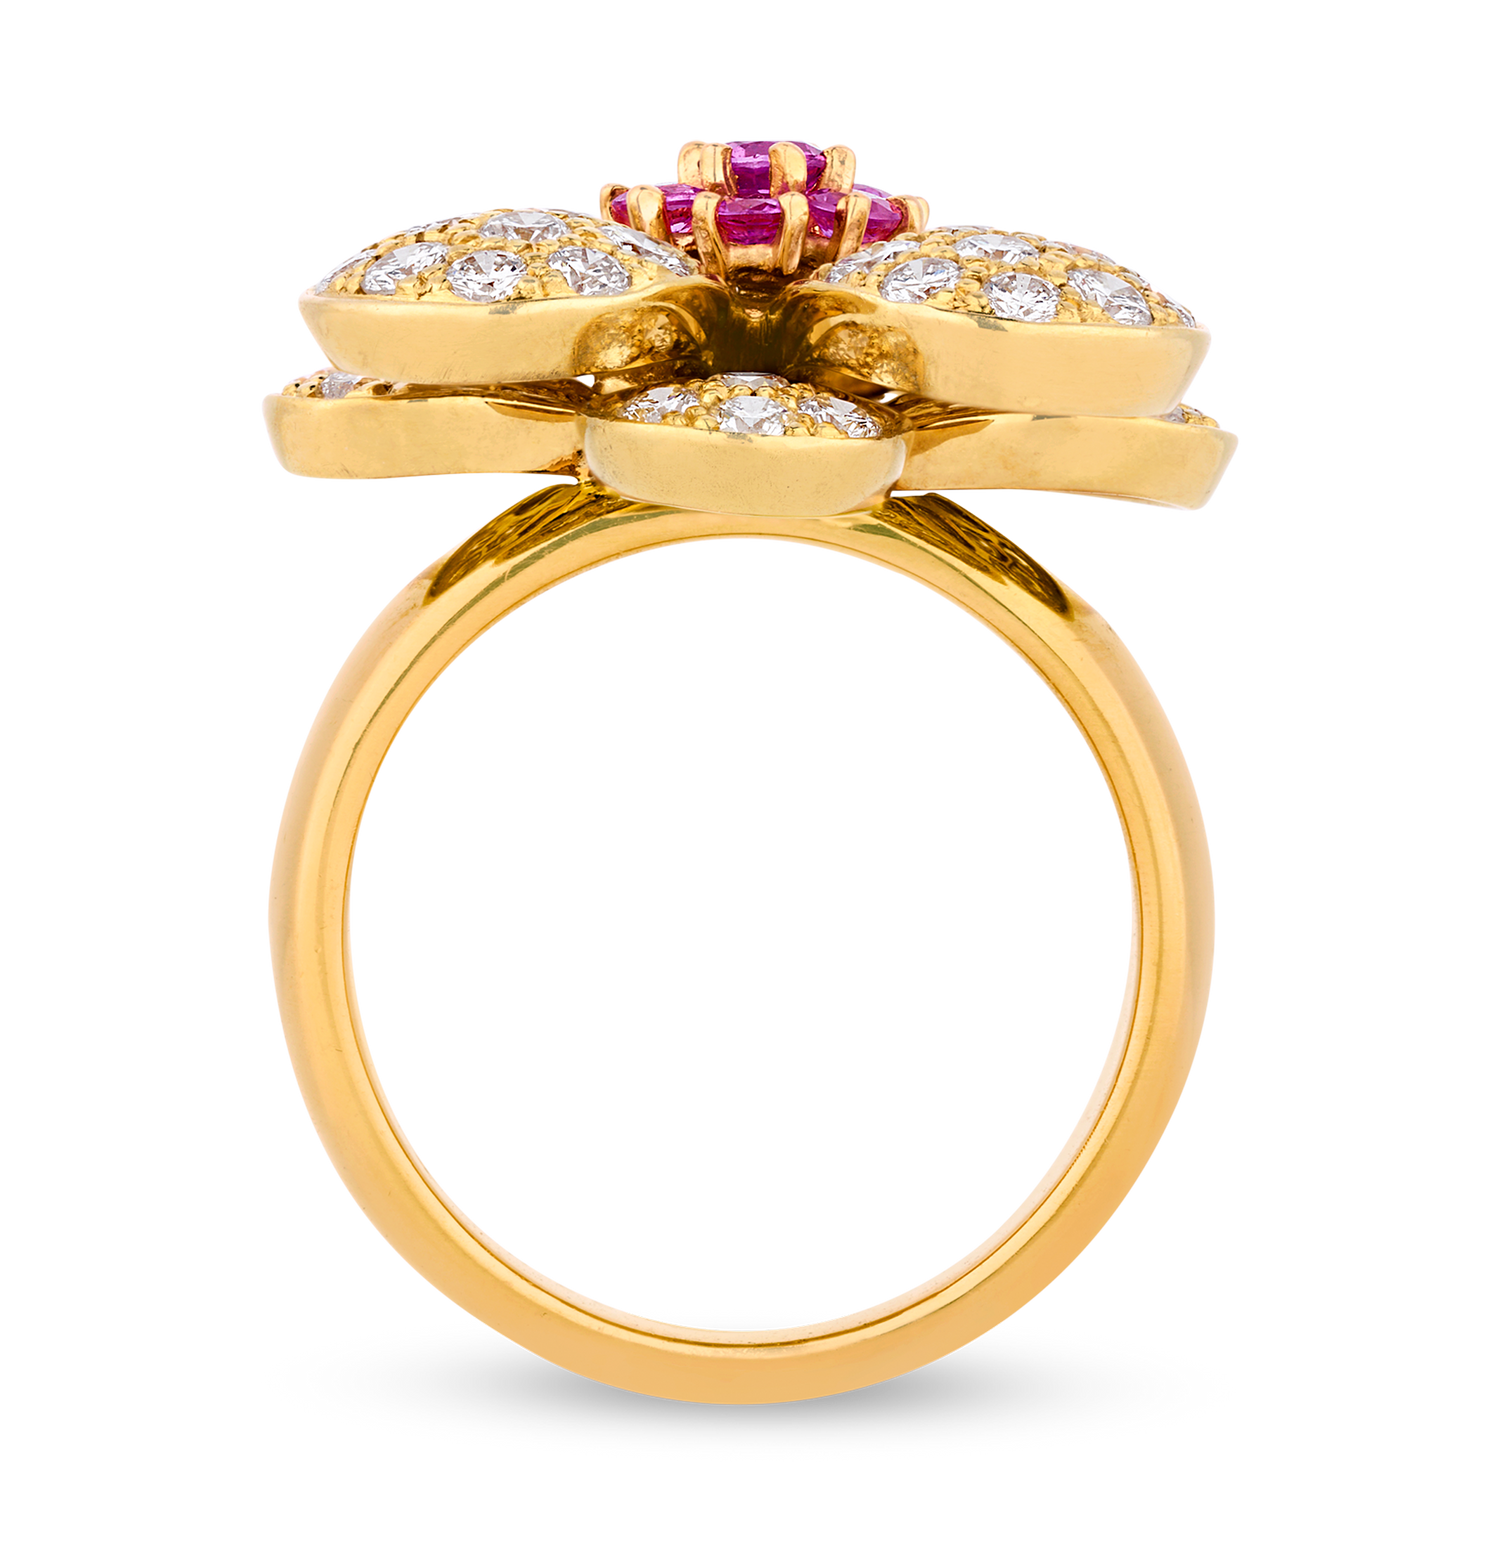 Van Cleef & Arpels Diamond Flower Ring, 1.92 carats